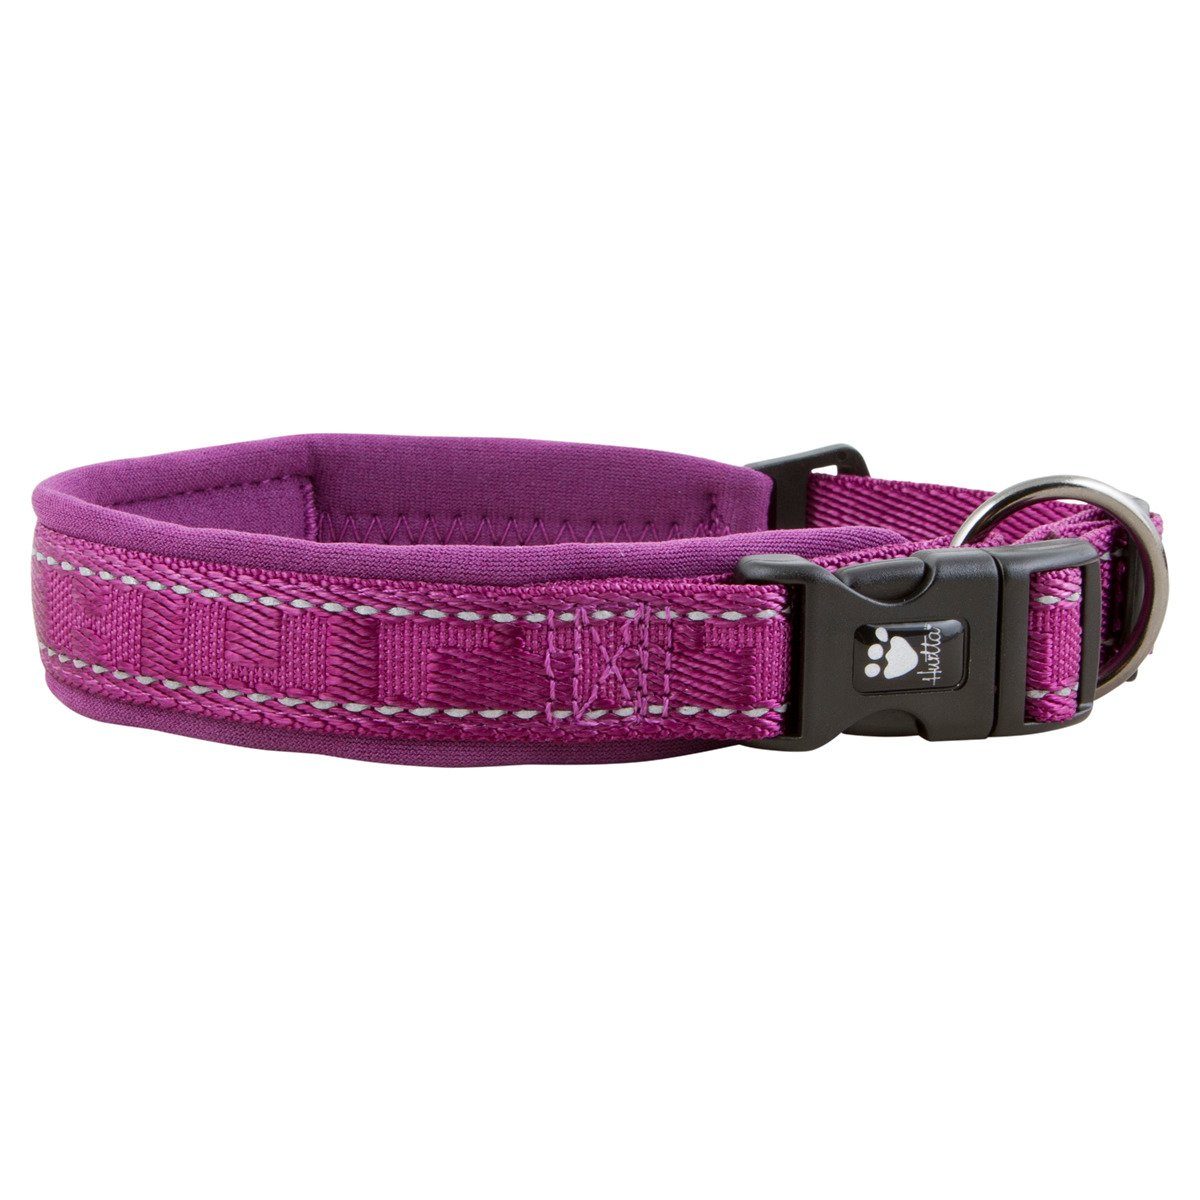 HURTTA Hunde-Halsband Casual Halsband violett